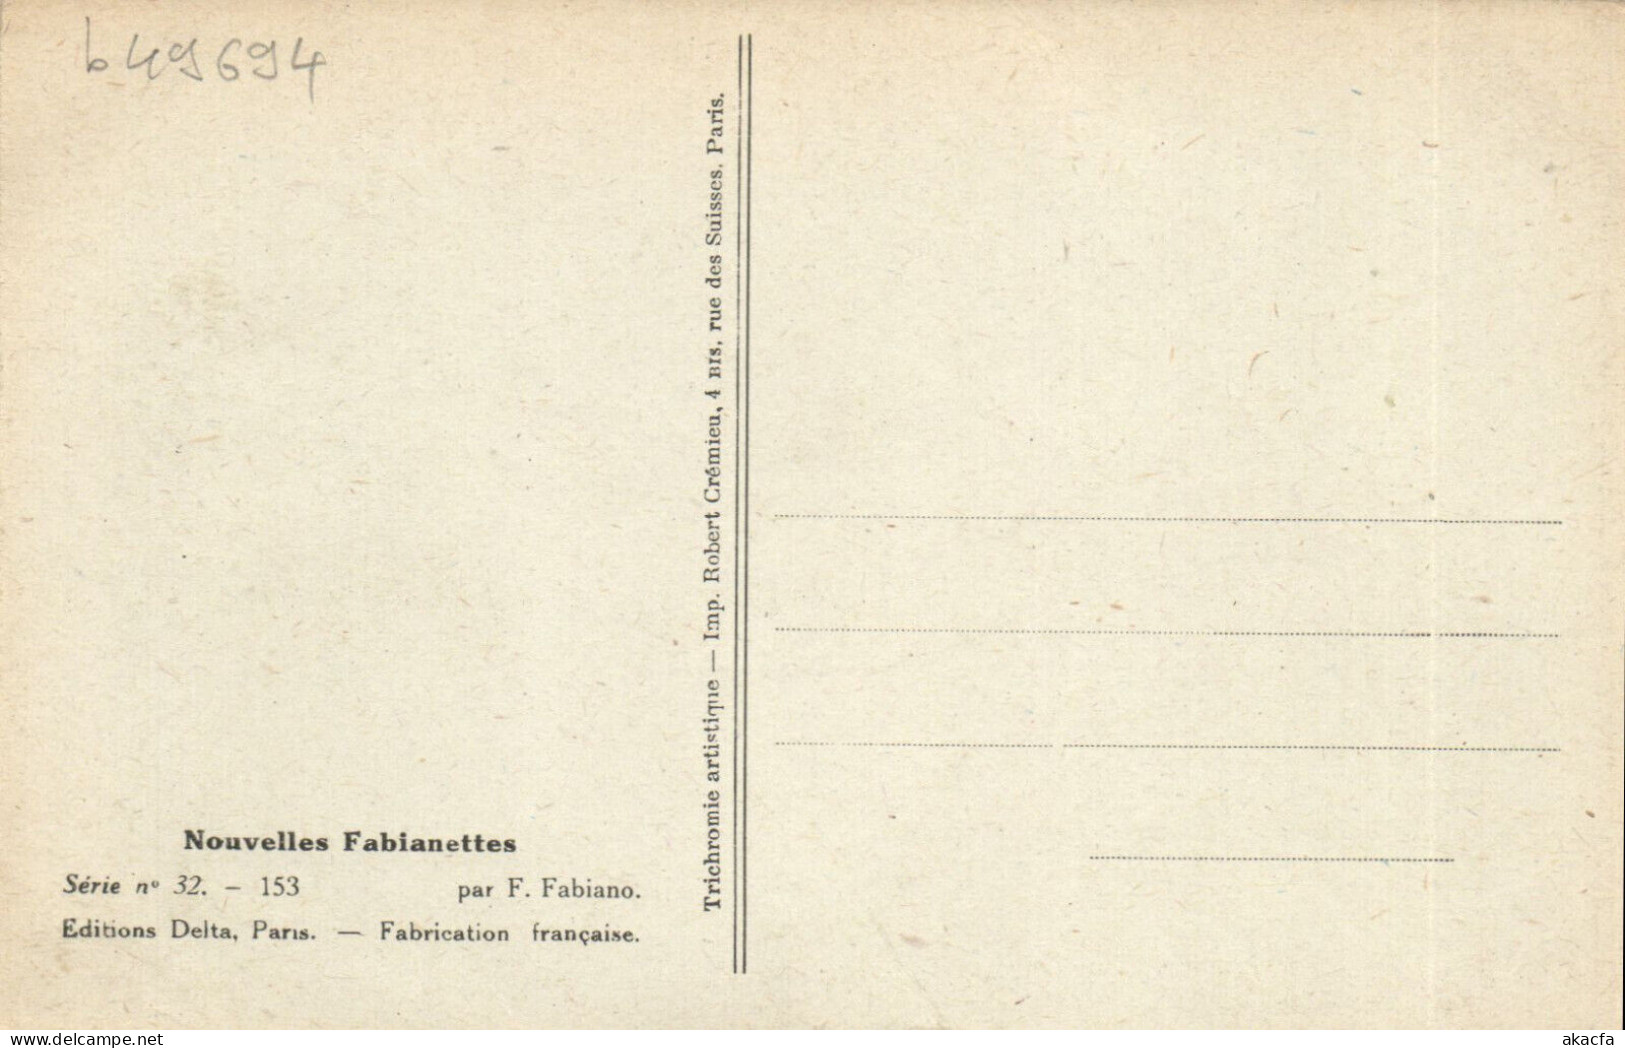 PC F. FABIANO, ARTIST SIGNED, GLAMOUR, RISQUE, Vintage Postcard (b49694) - Fabiano